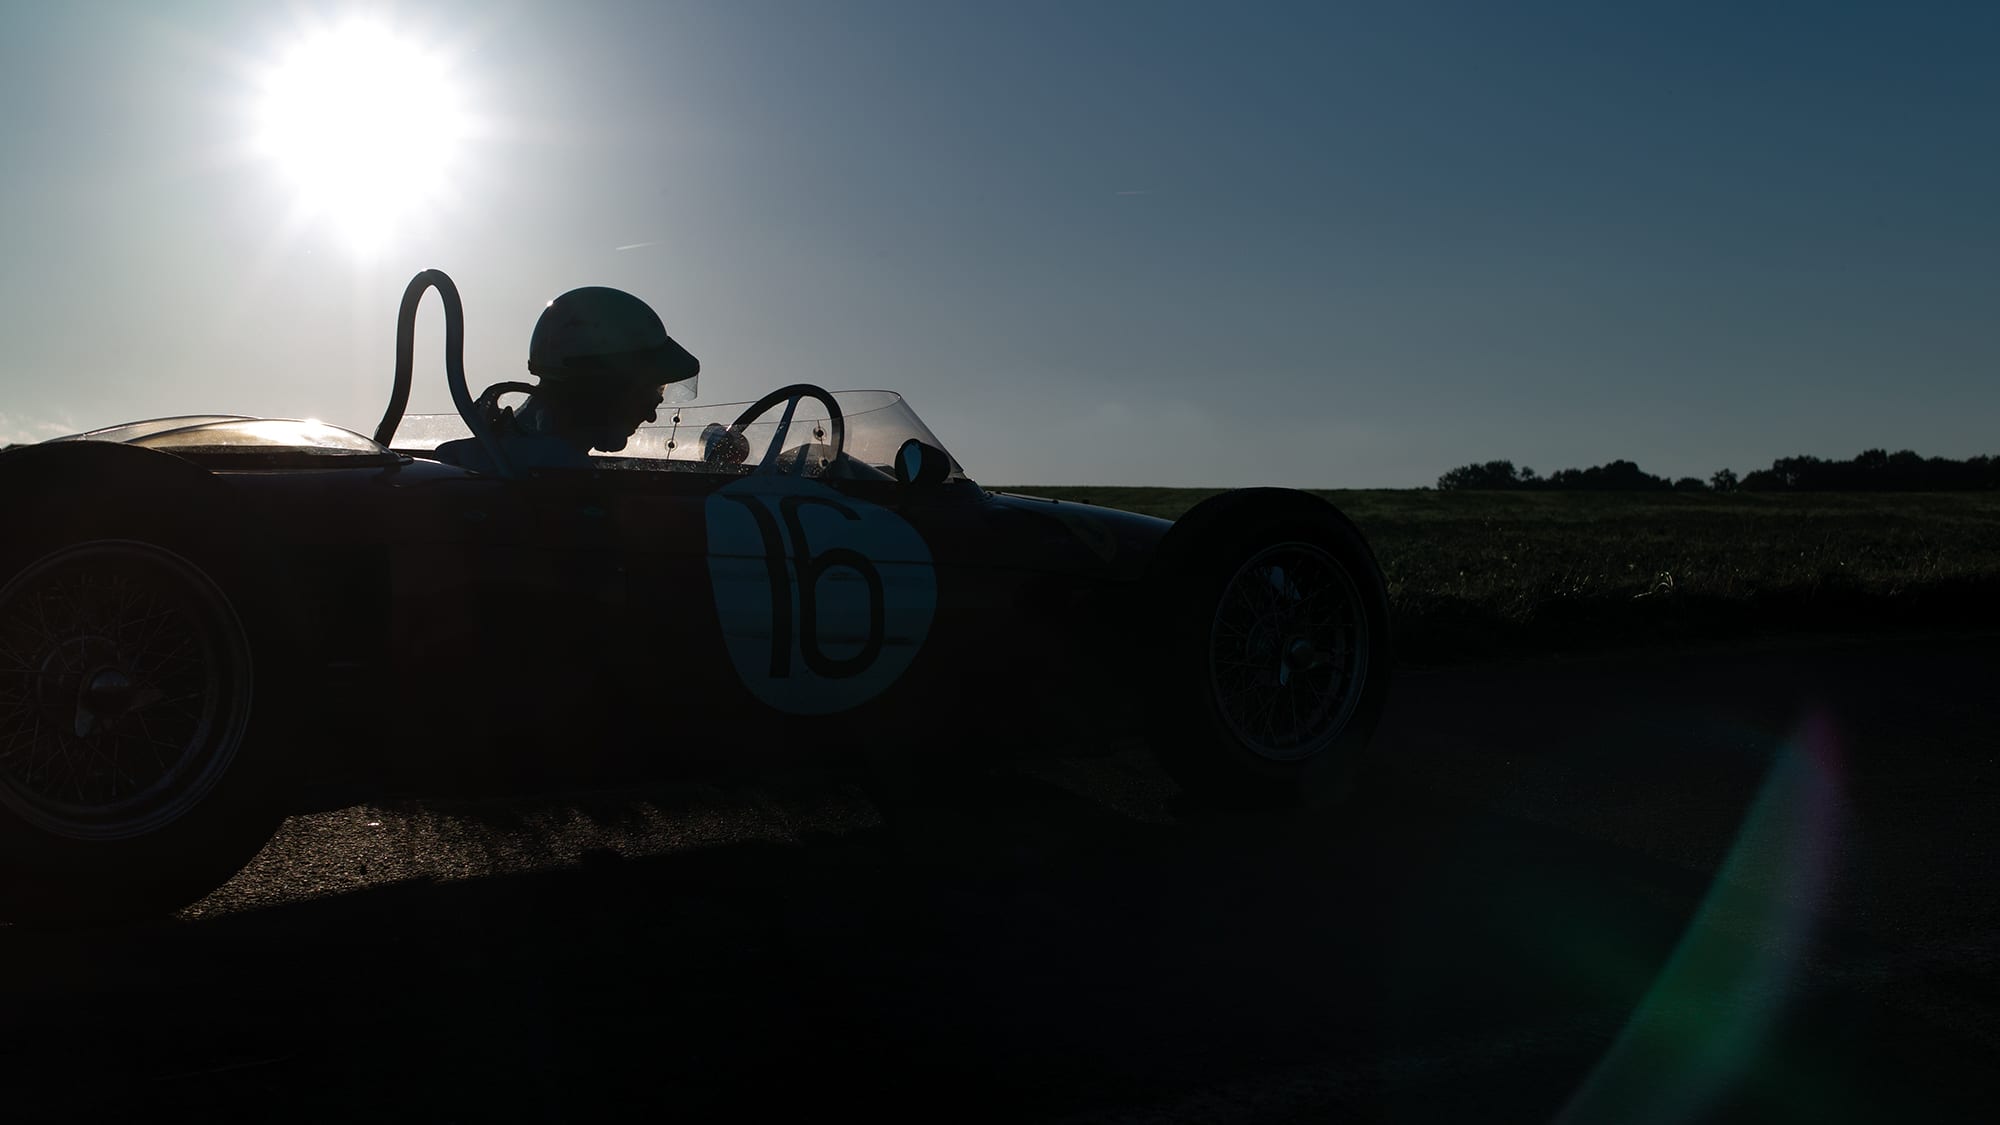 Silhouette of Derek Hill in Sharknose Ferrari